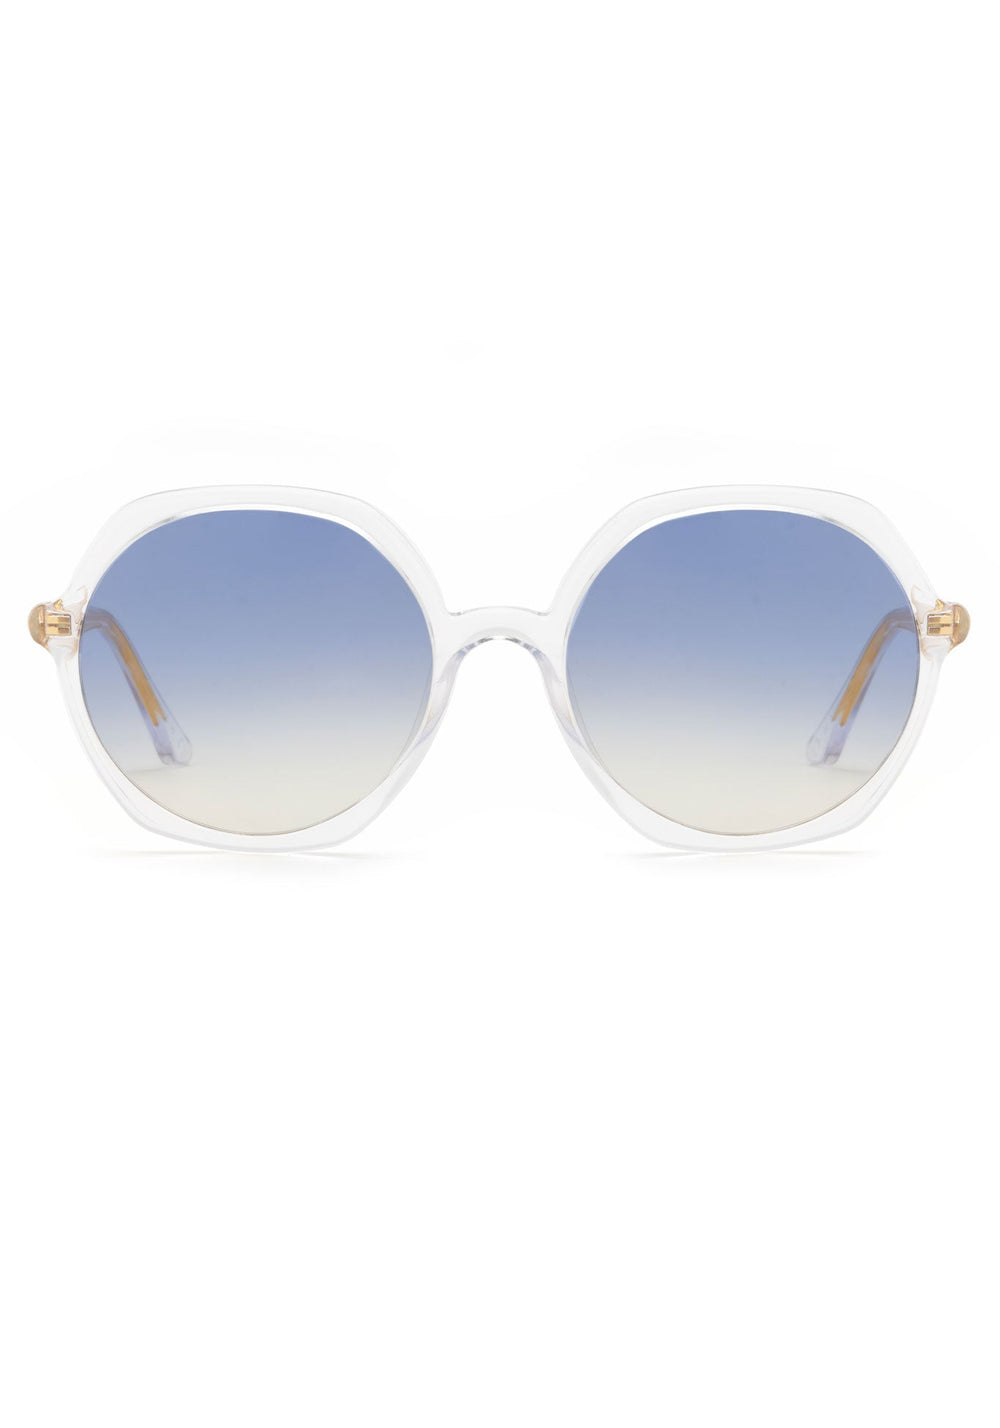 KREWE SUNGLASSES - SOPHIA | Crystal + Custom Vanity Tint handcrafted, luxury oversized round sunglasses with blue tinted lenses